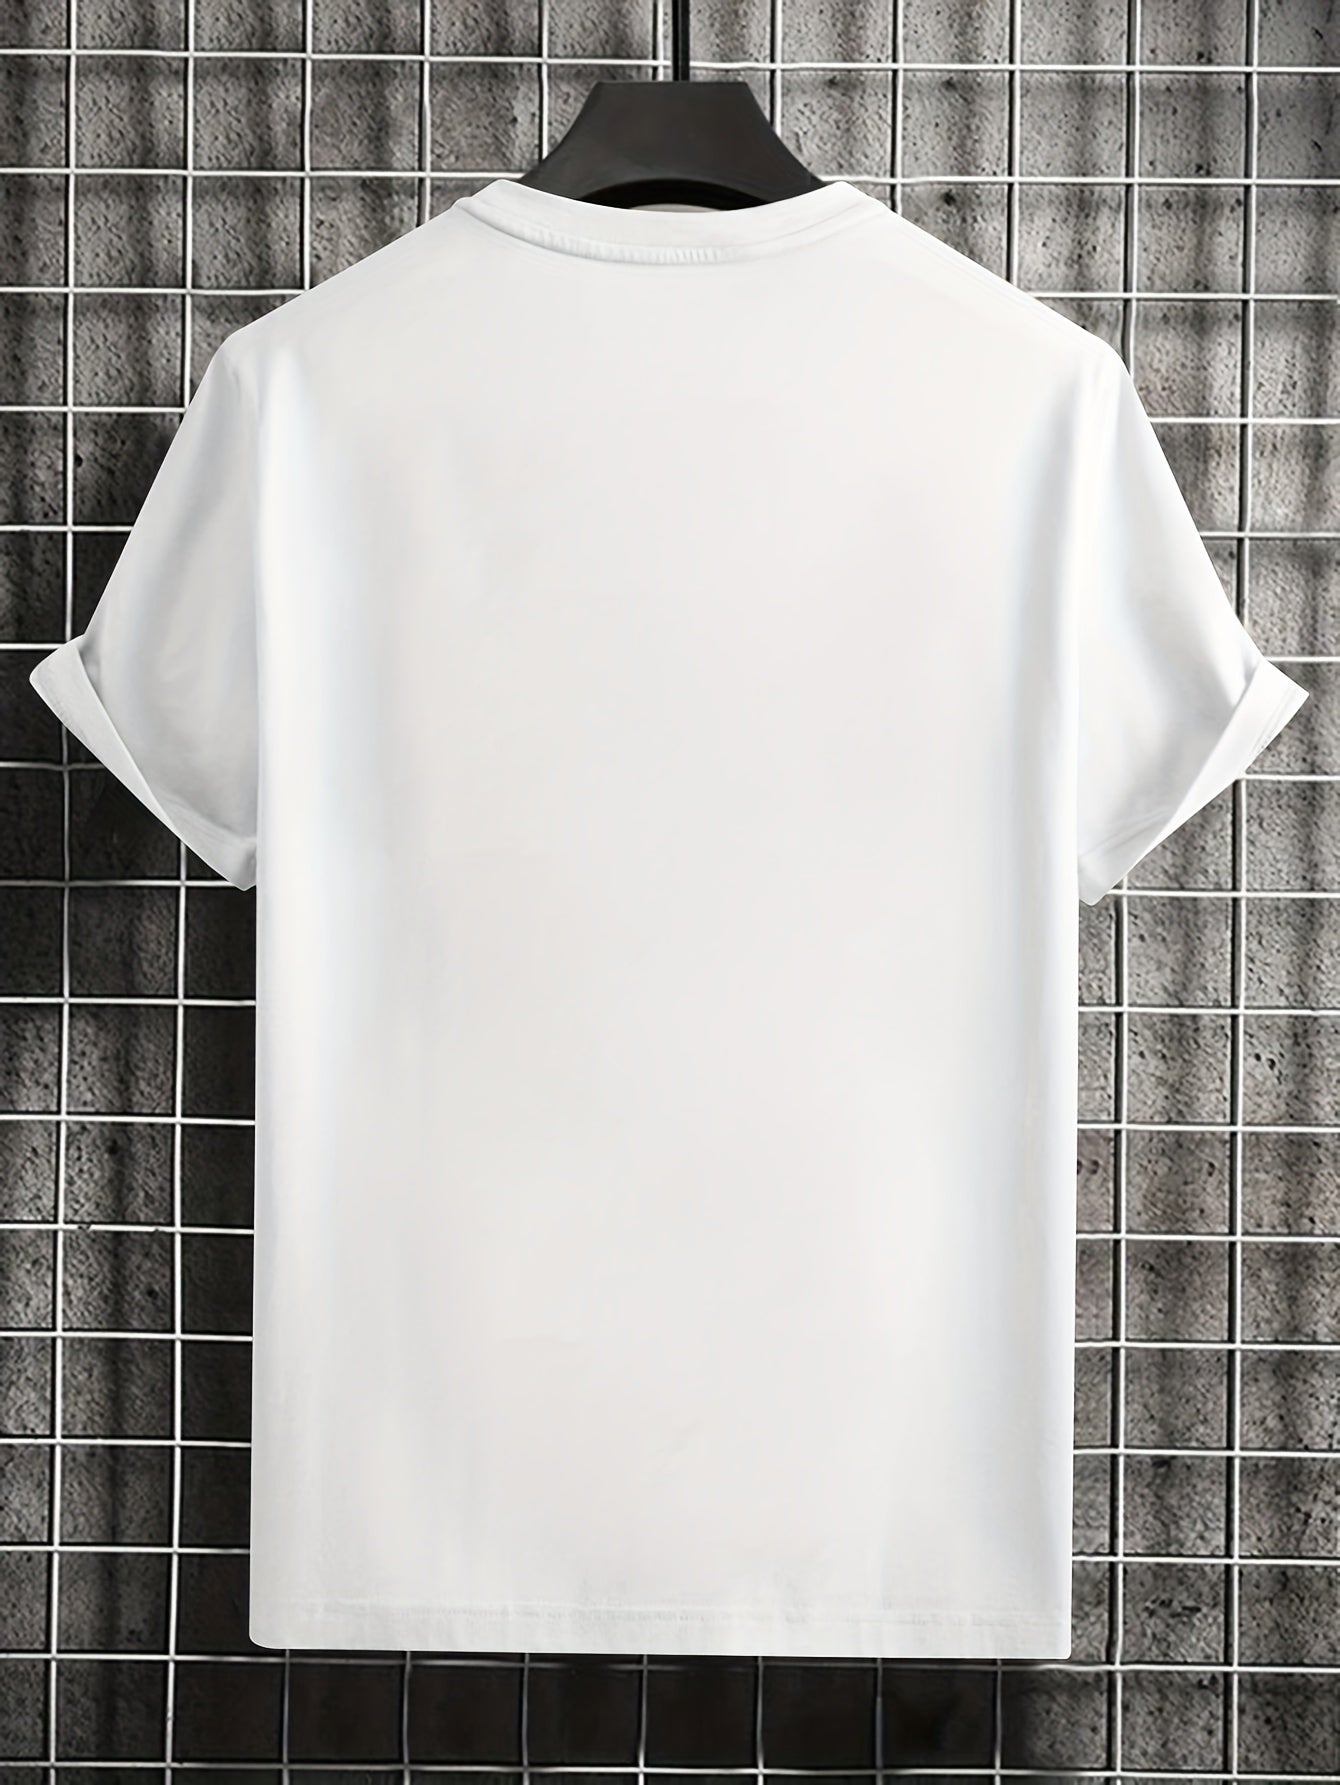 Men's Graphic Print T-Shirt for Summer Outdoor Wear - LA Inspired Design